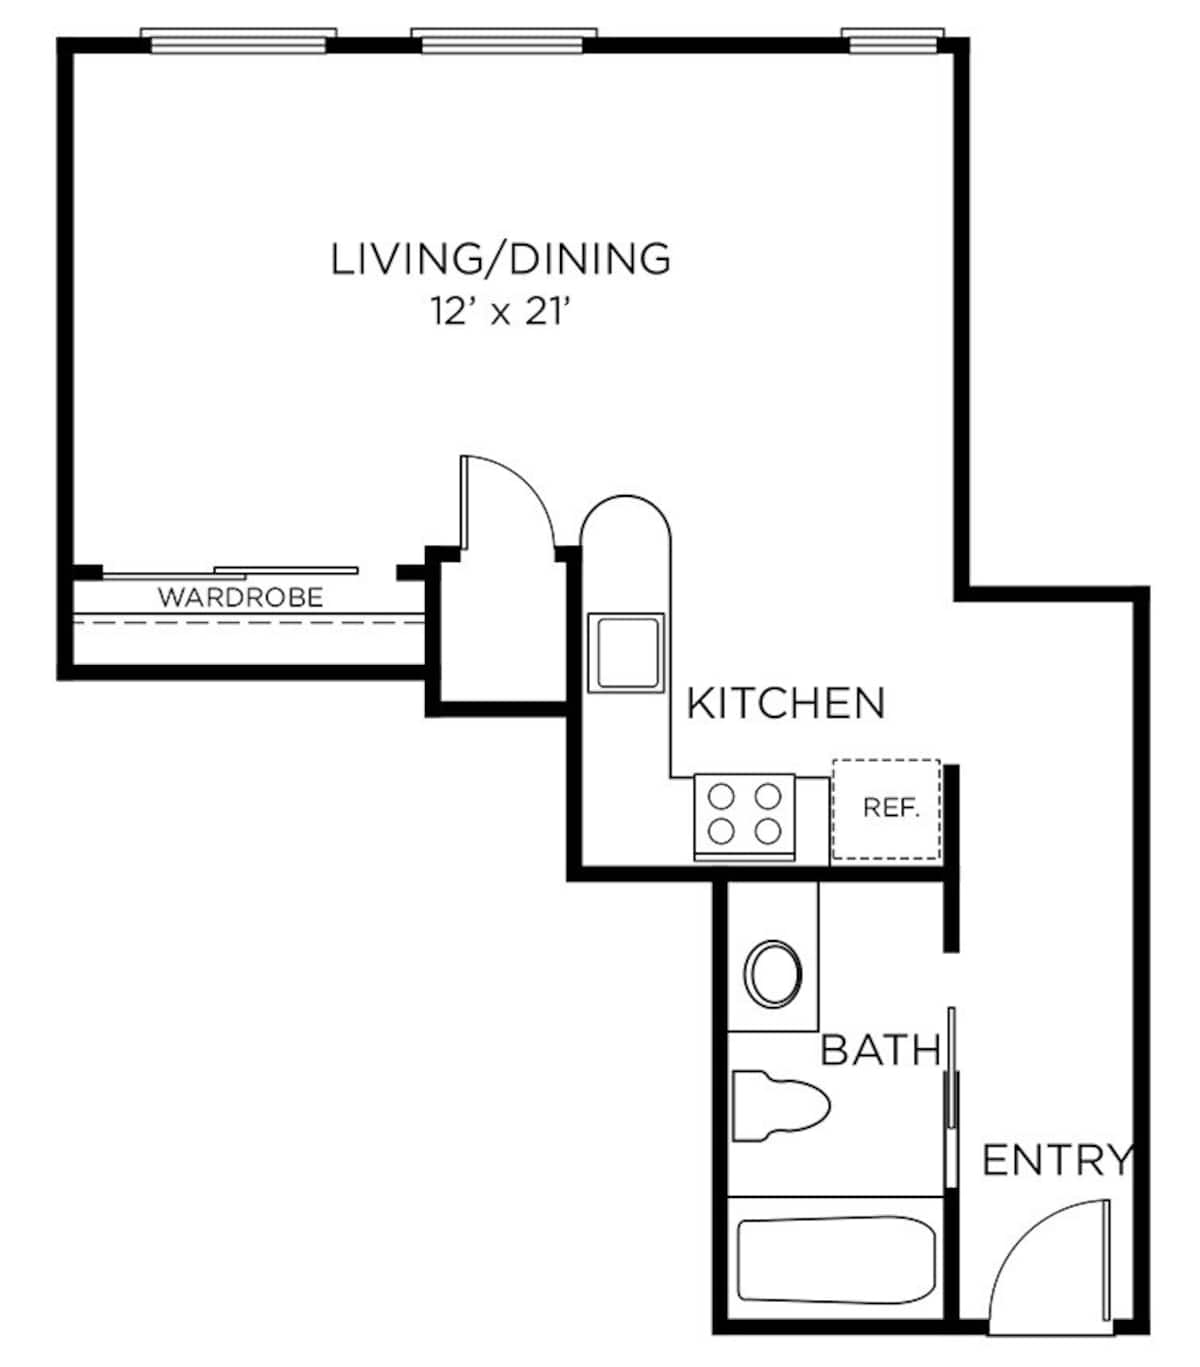 Floorplan diagram for A1 - Studio, showing Studio